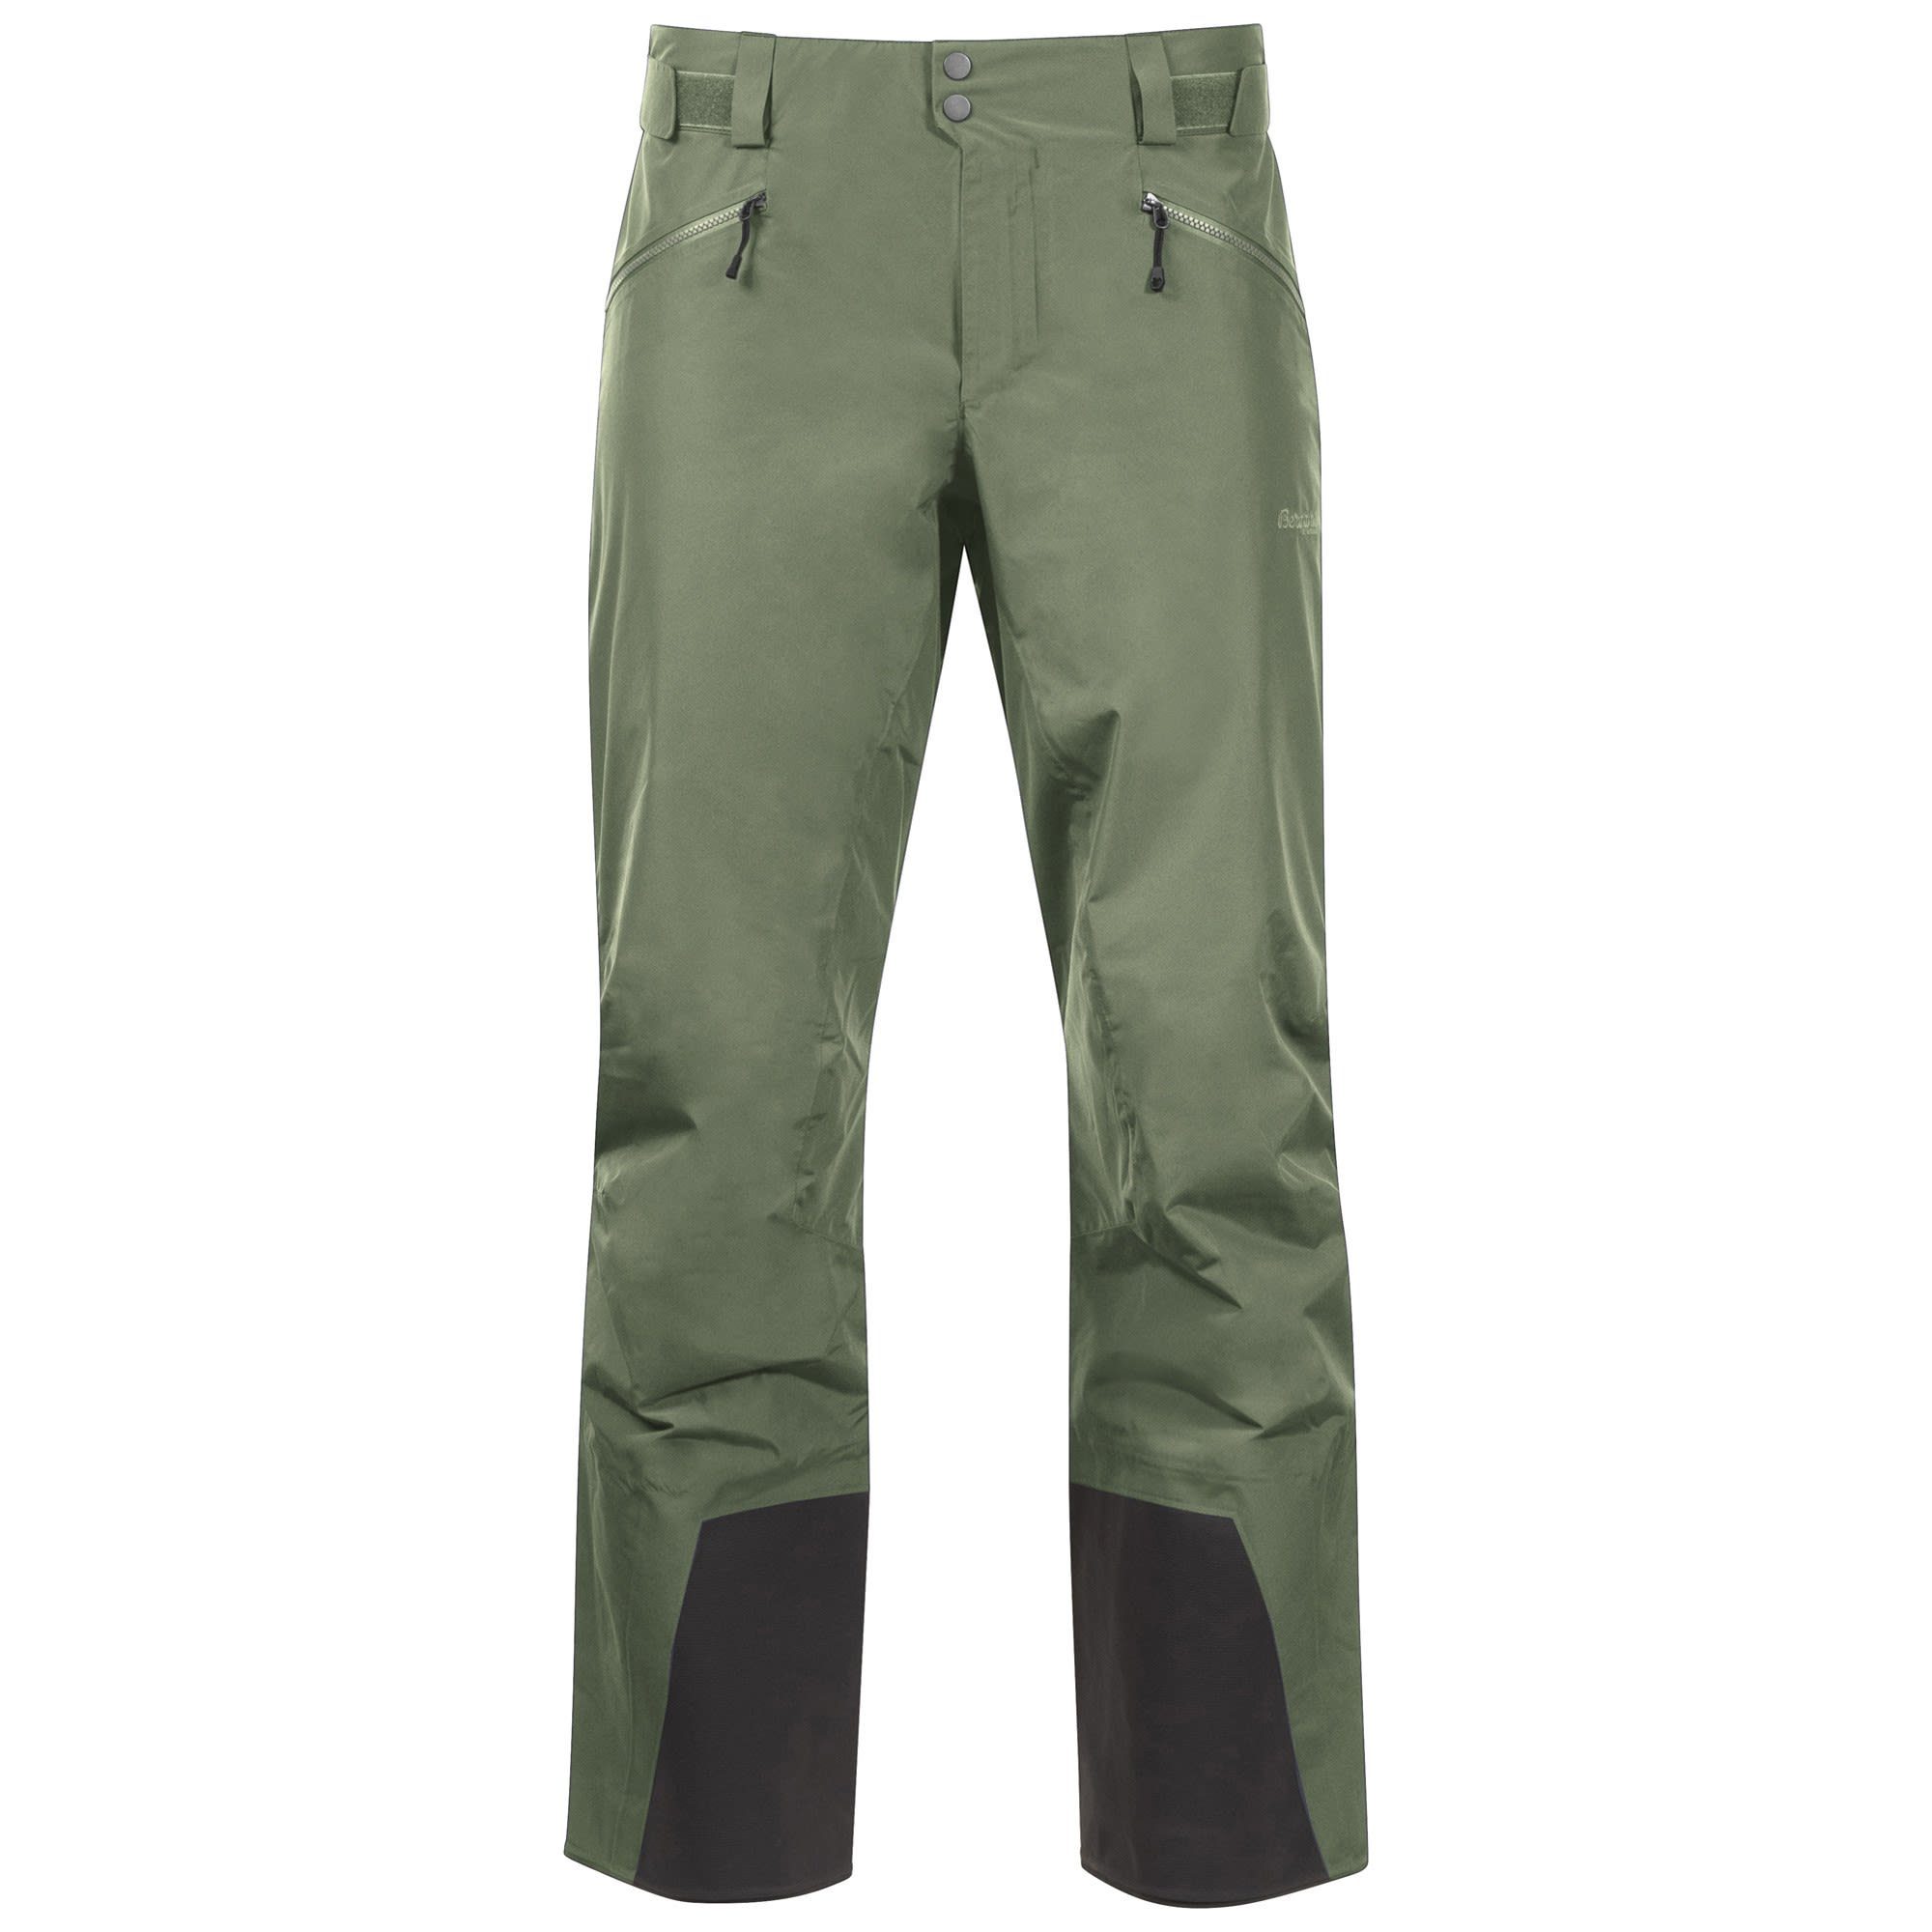 Stranda Bergans Herren Hose Bergans & M V2 Insulated grün Shorts Pants